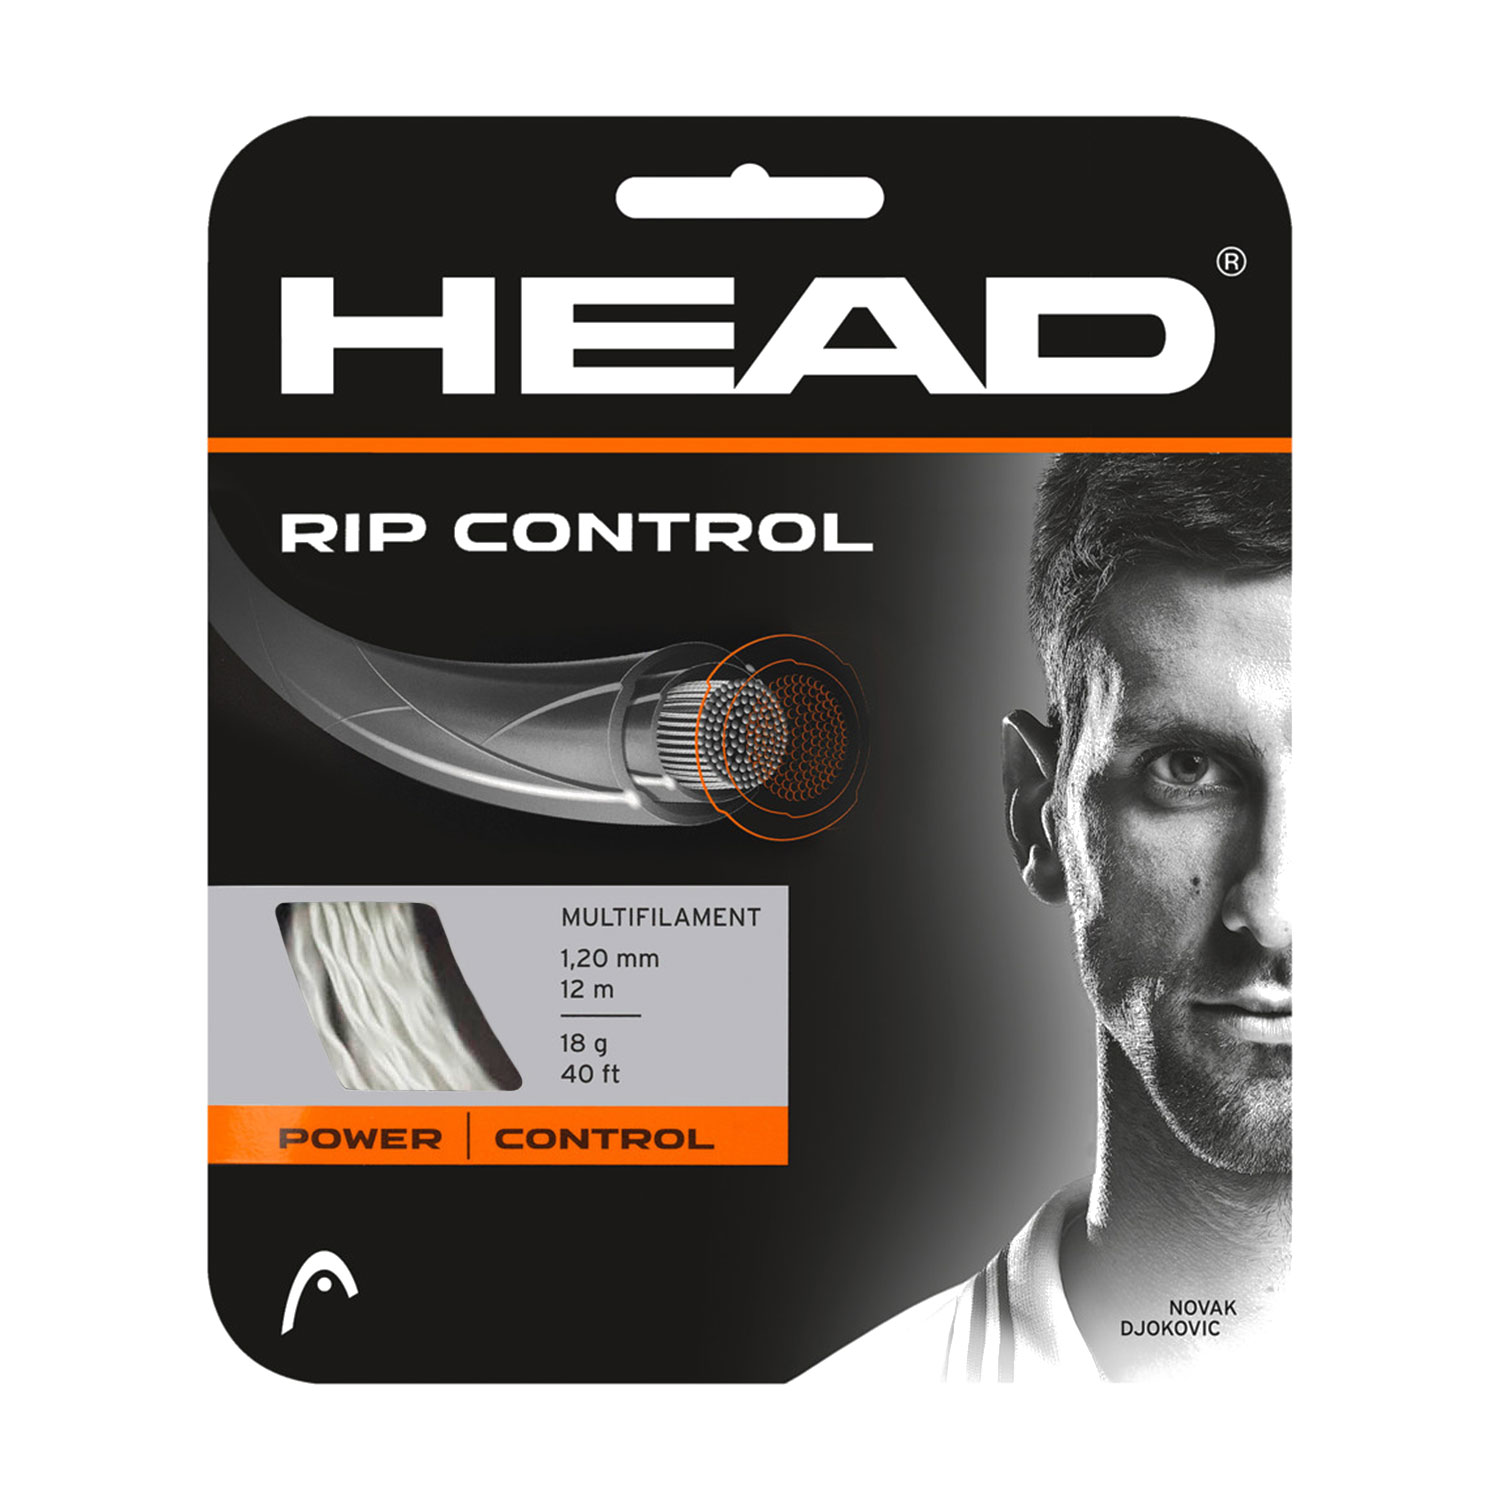 Head Rip Control 1.20 12 m Set - White